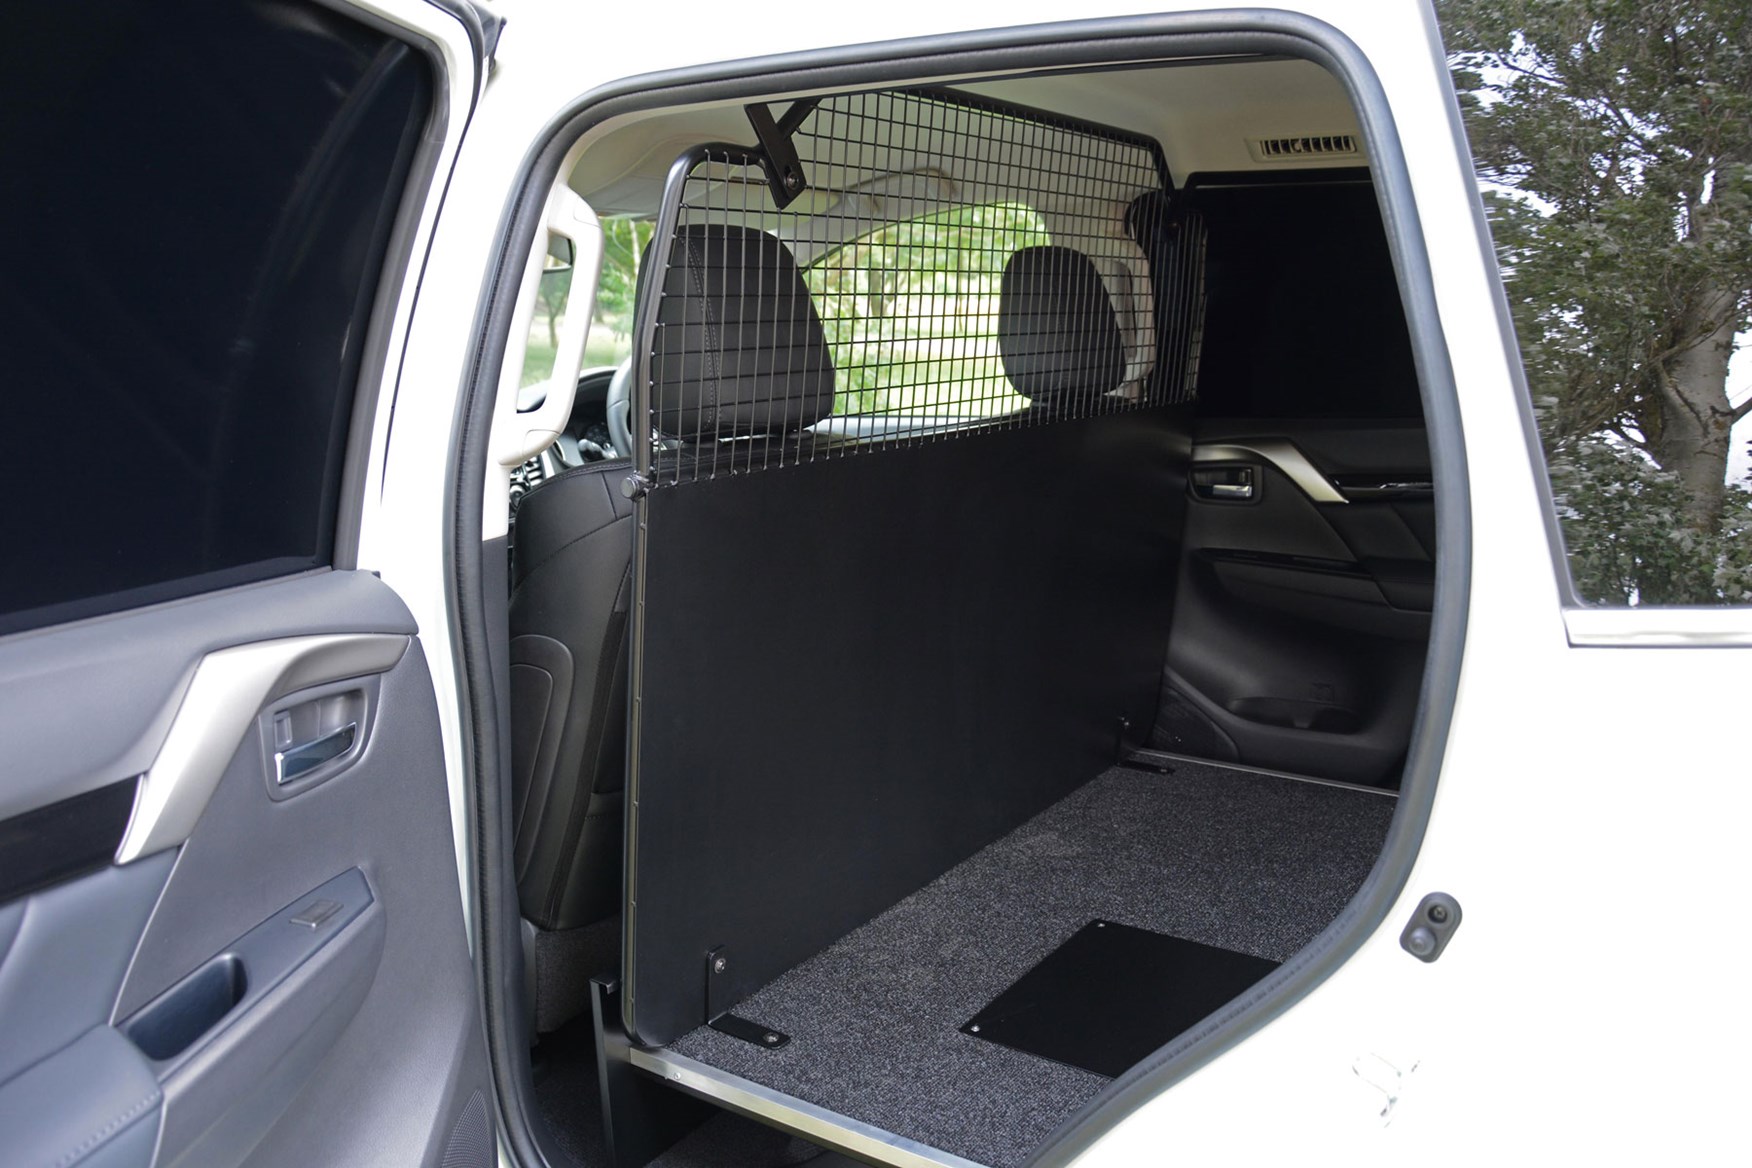 Mitsubishi Outlander Commercial 4x4 van - load area via side door showing load platform with carpet